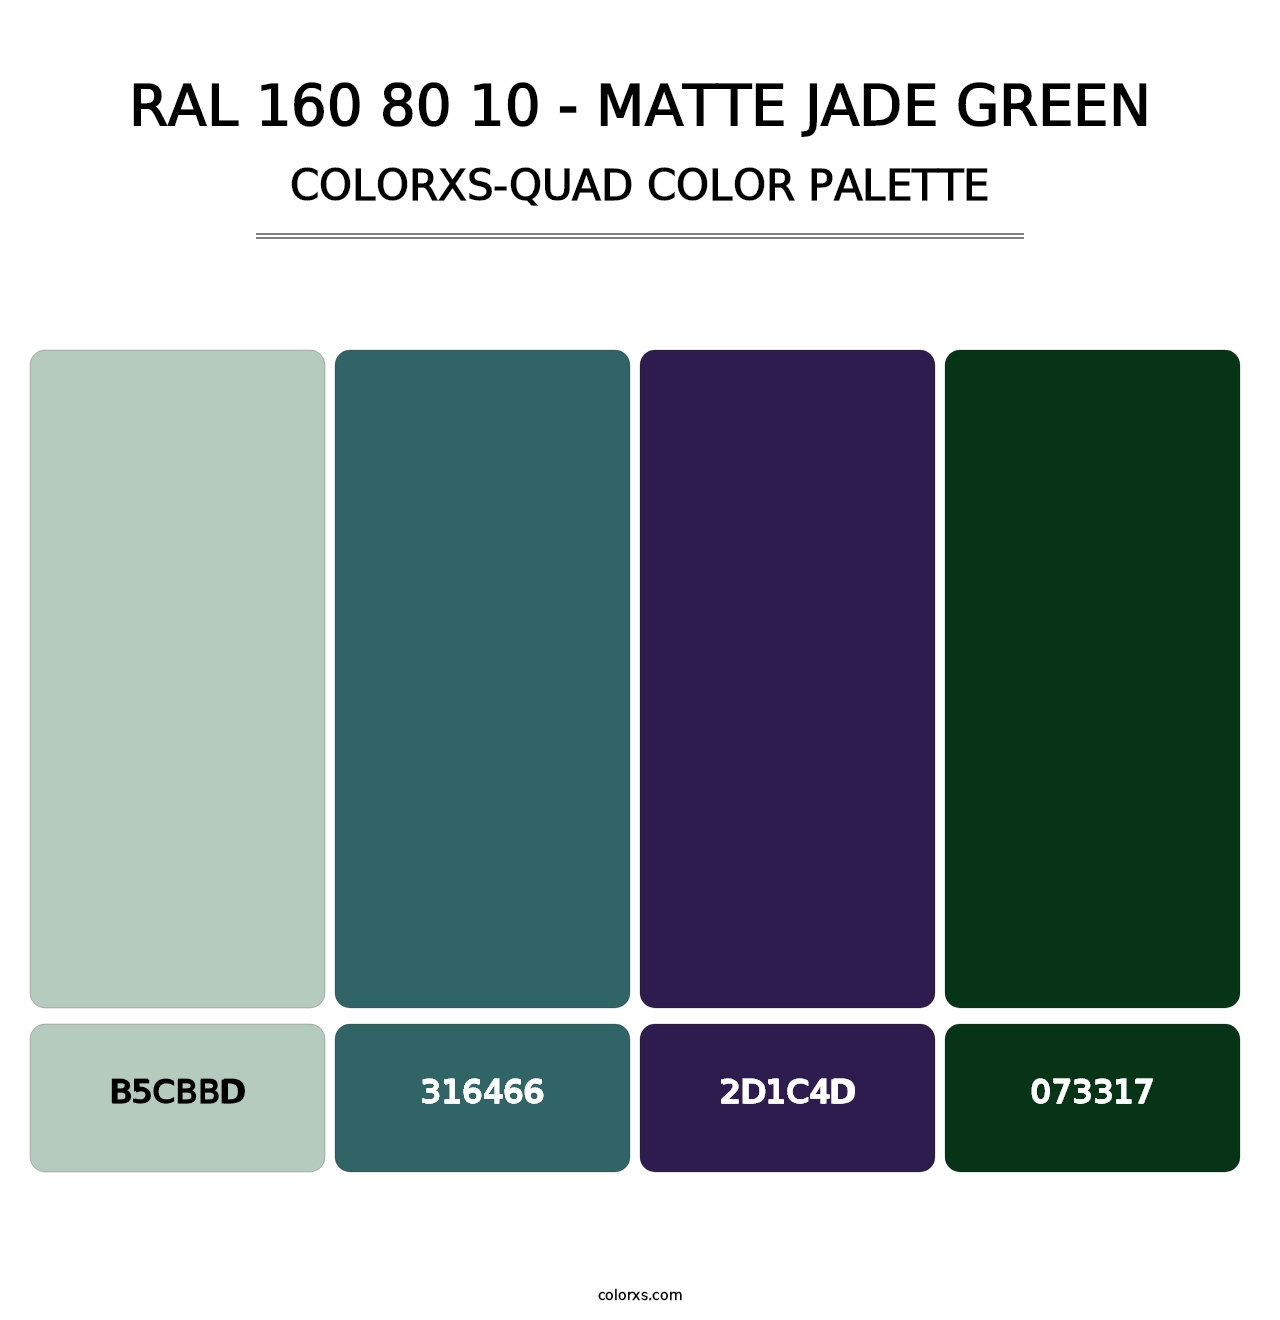 RAL 160 80 10 - Matte Jade Green - Colorxs Quad Palette